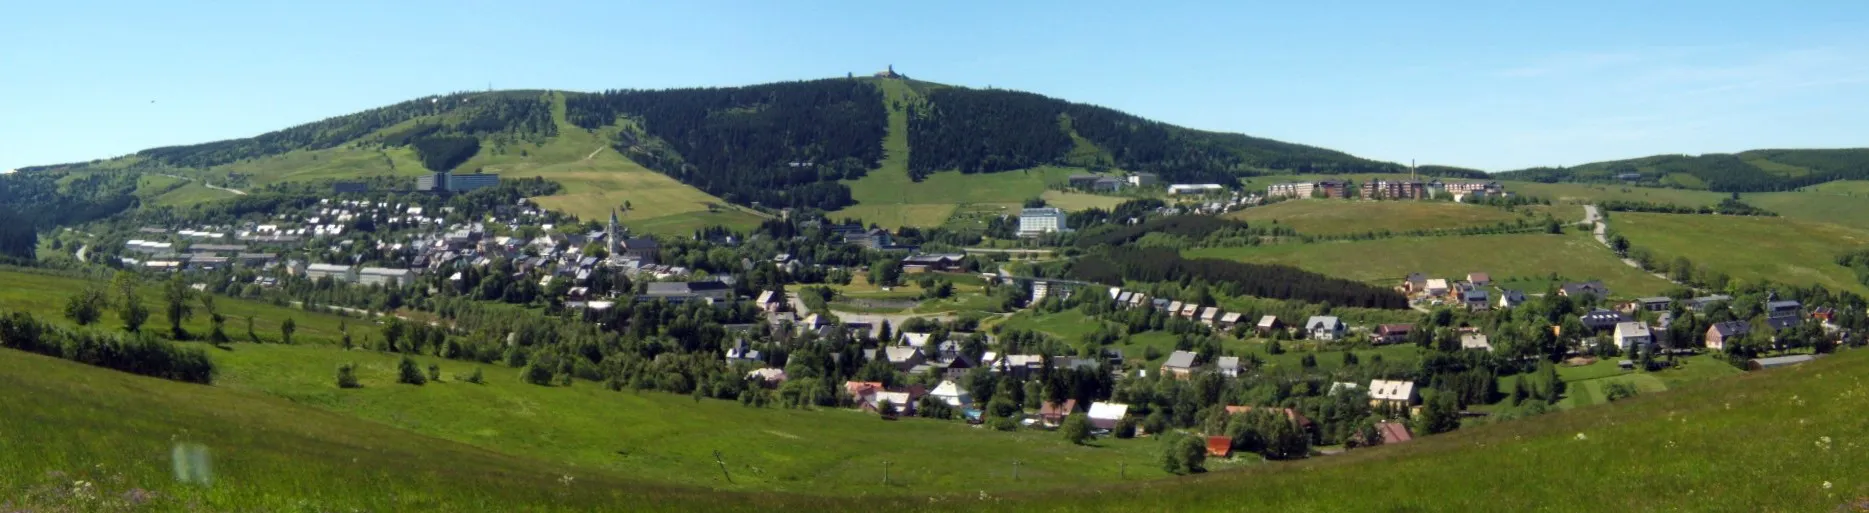 Image of Kurort Oberwiesenthal